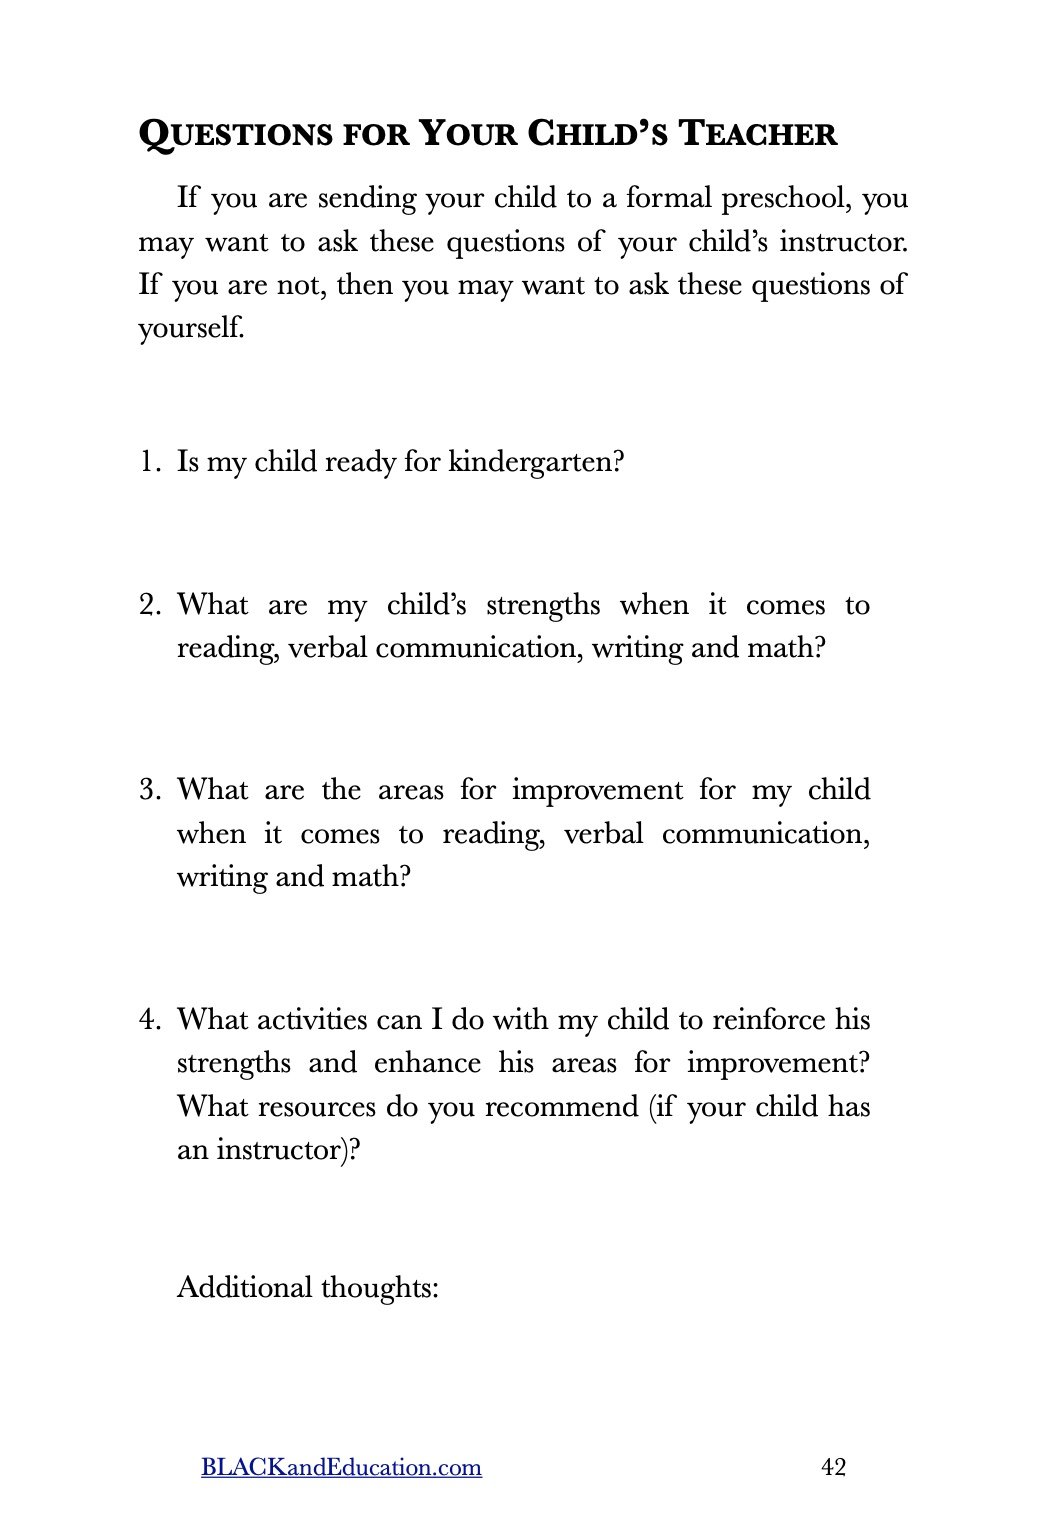 Pre-K questions for the teacher.jpg